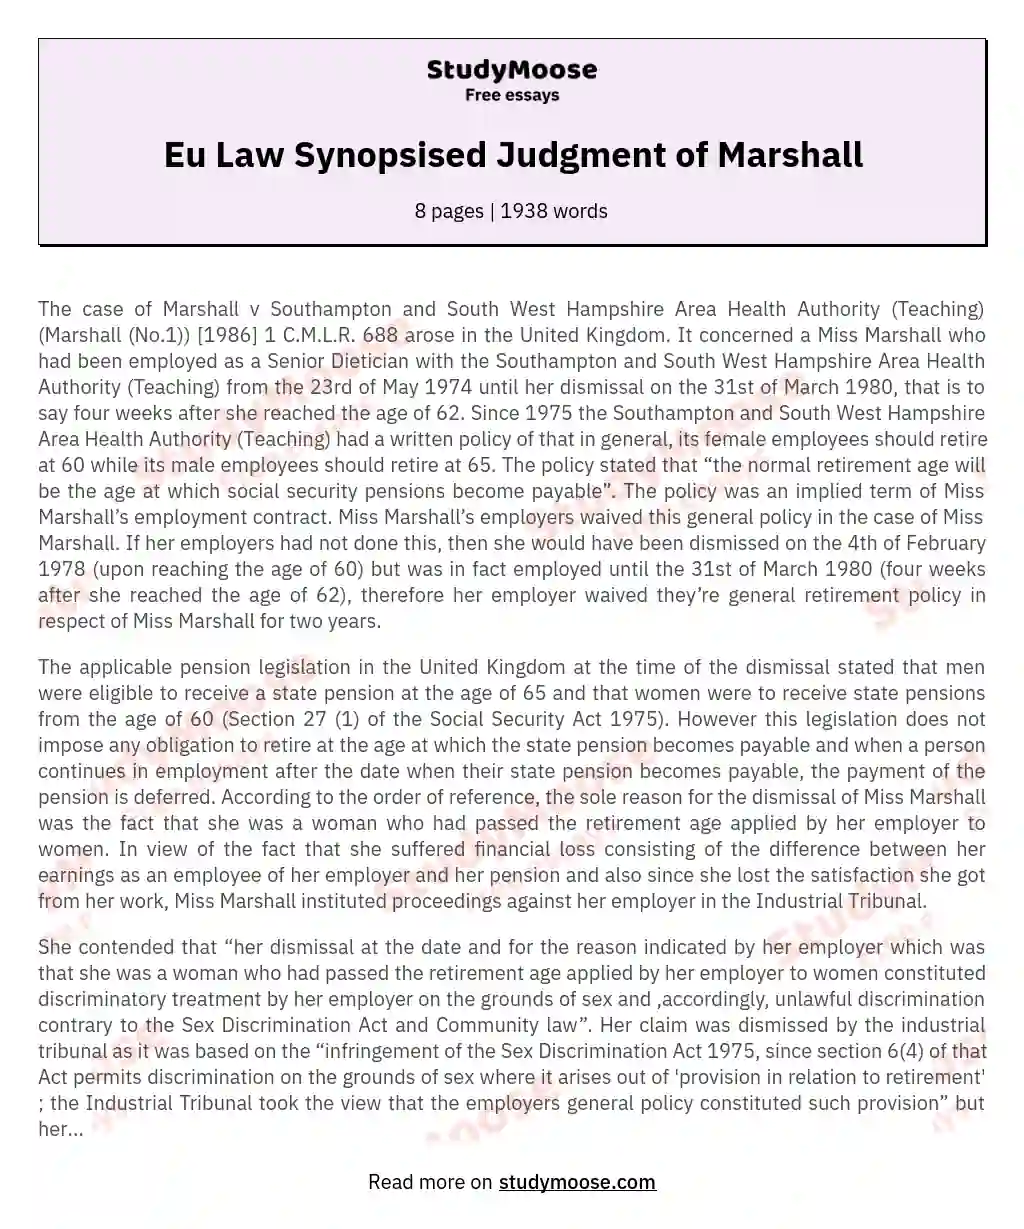 Eu Law Synopsised Judgment of Marshall essay